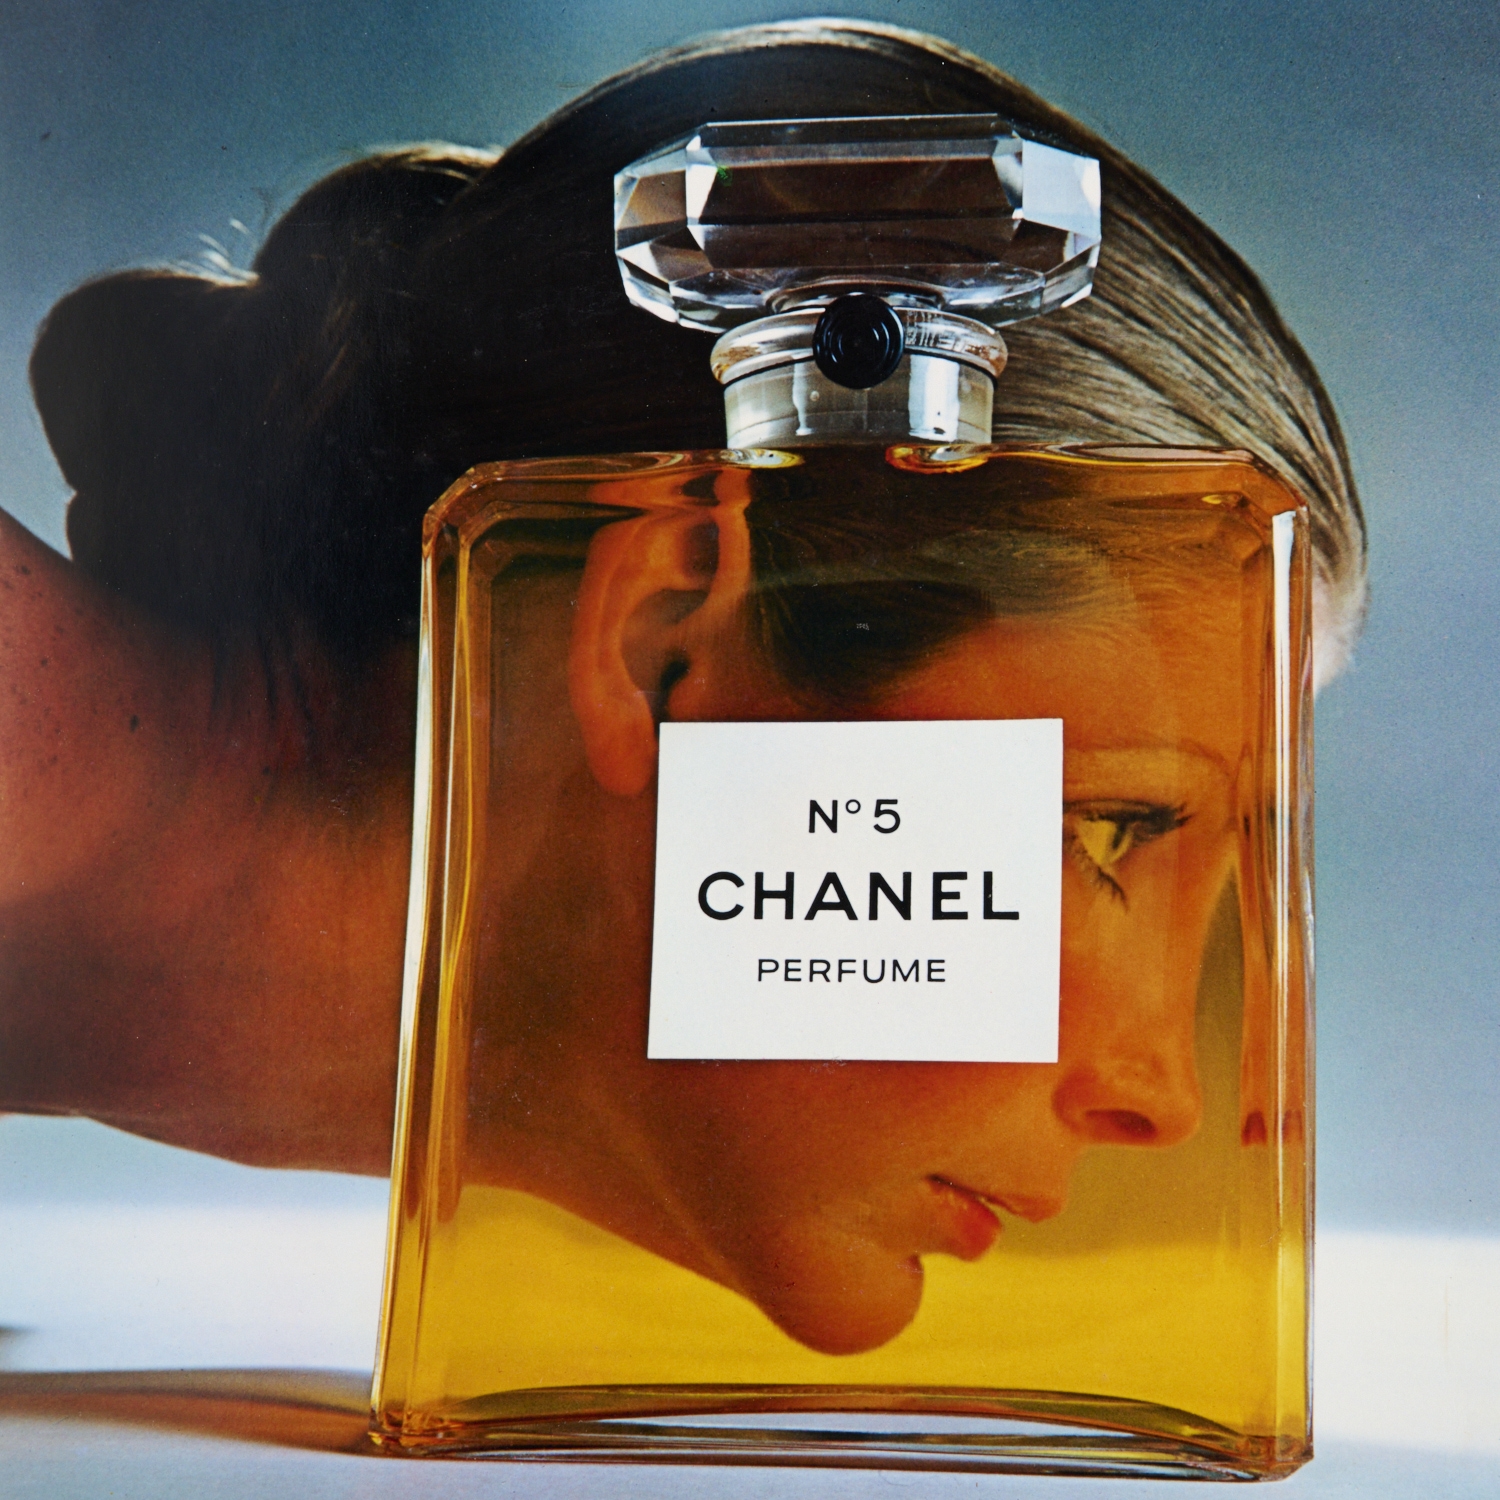 Richard Avedon, Chanel perfume ad featuring Catherine Deneuve